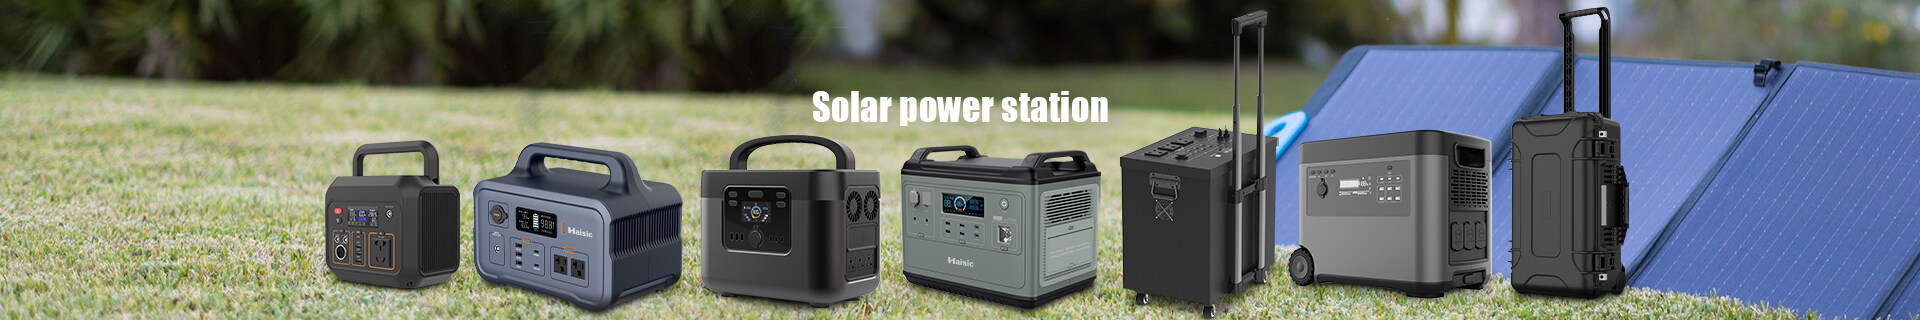 solar generator manufacturer, solar generator supplier, solar generator factory